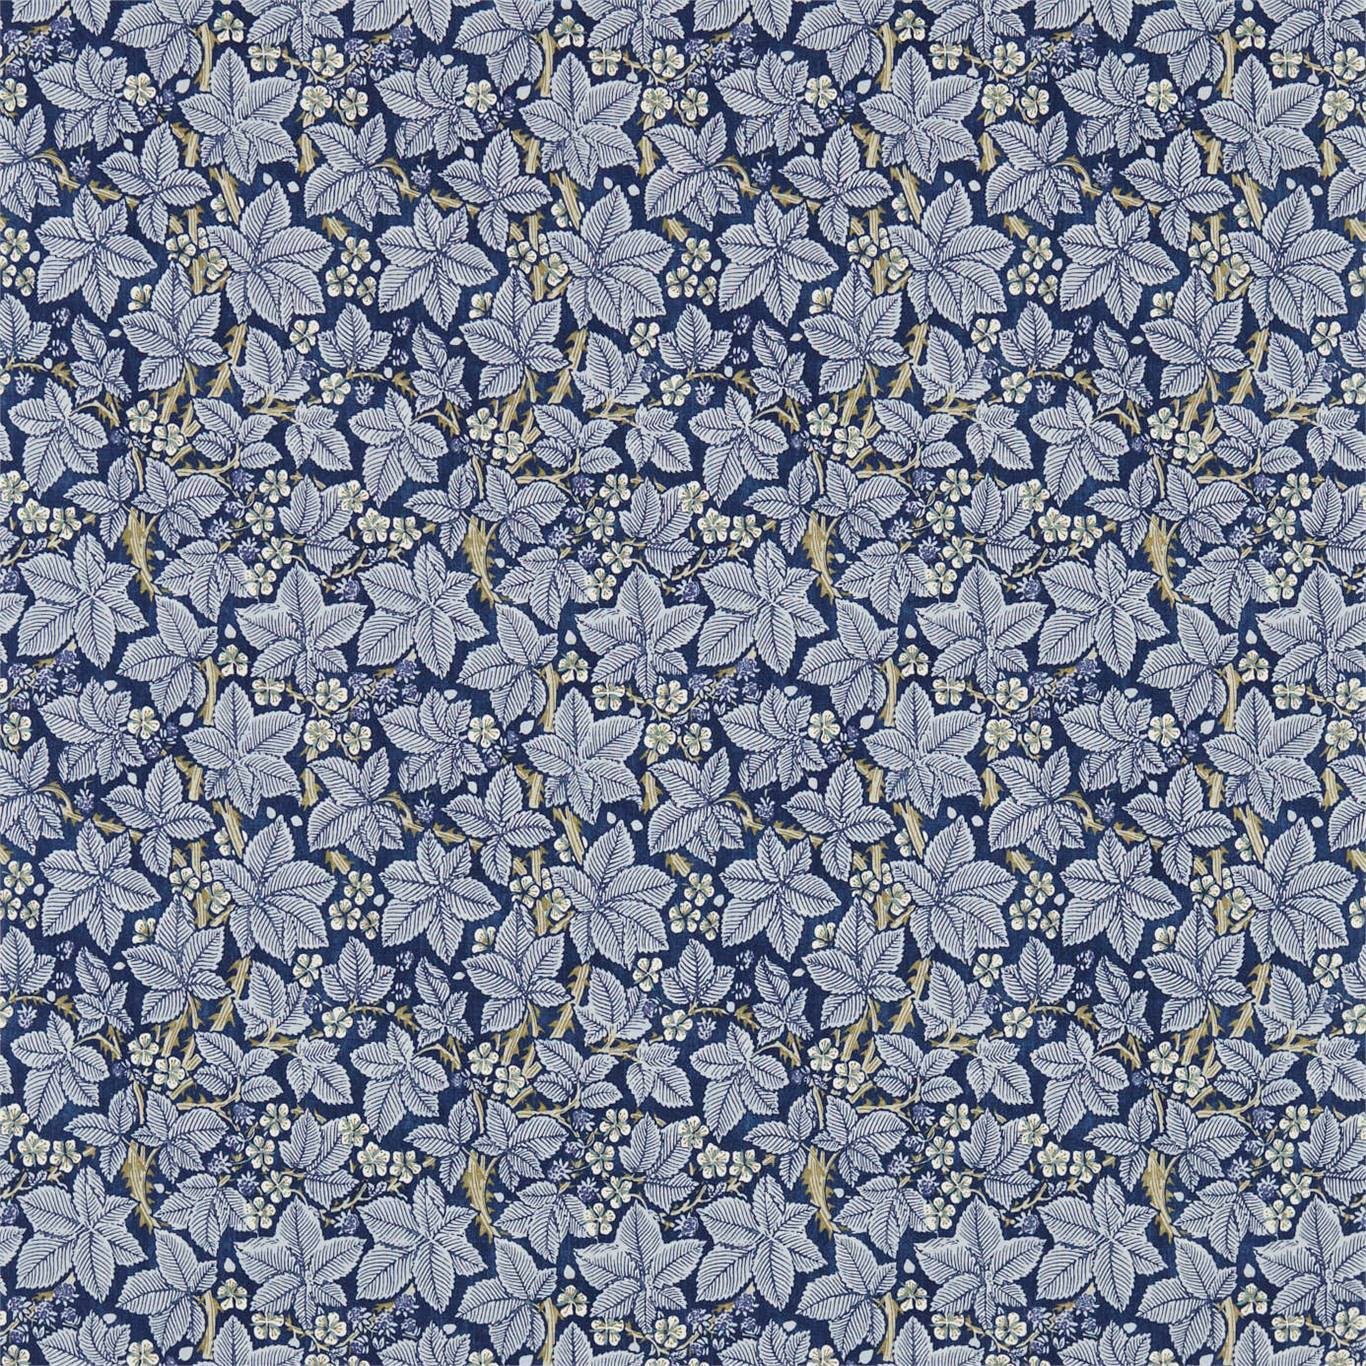 Bramble Fabric by Morris & Co. - DCMF226724 - Indigo/Mineral